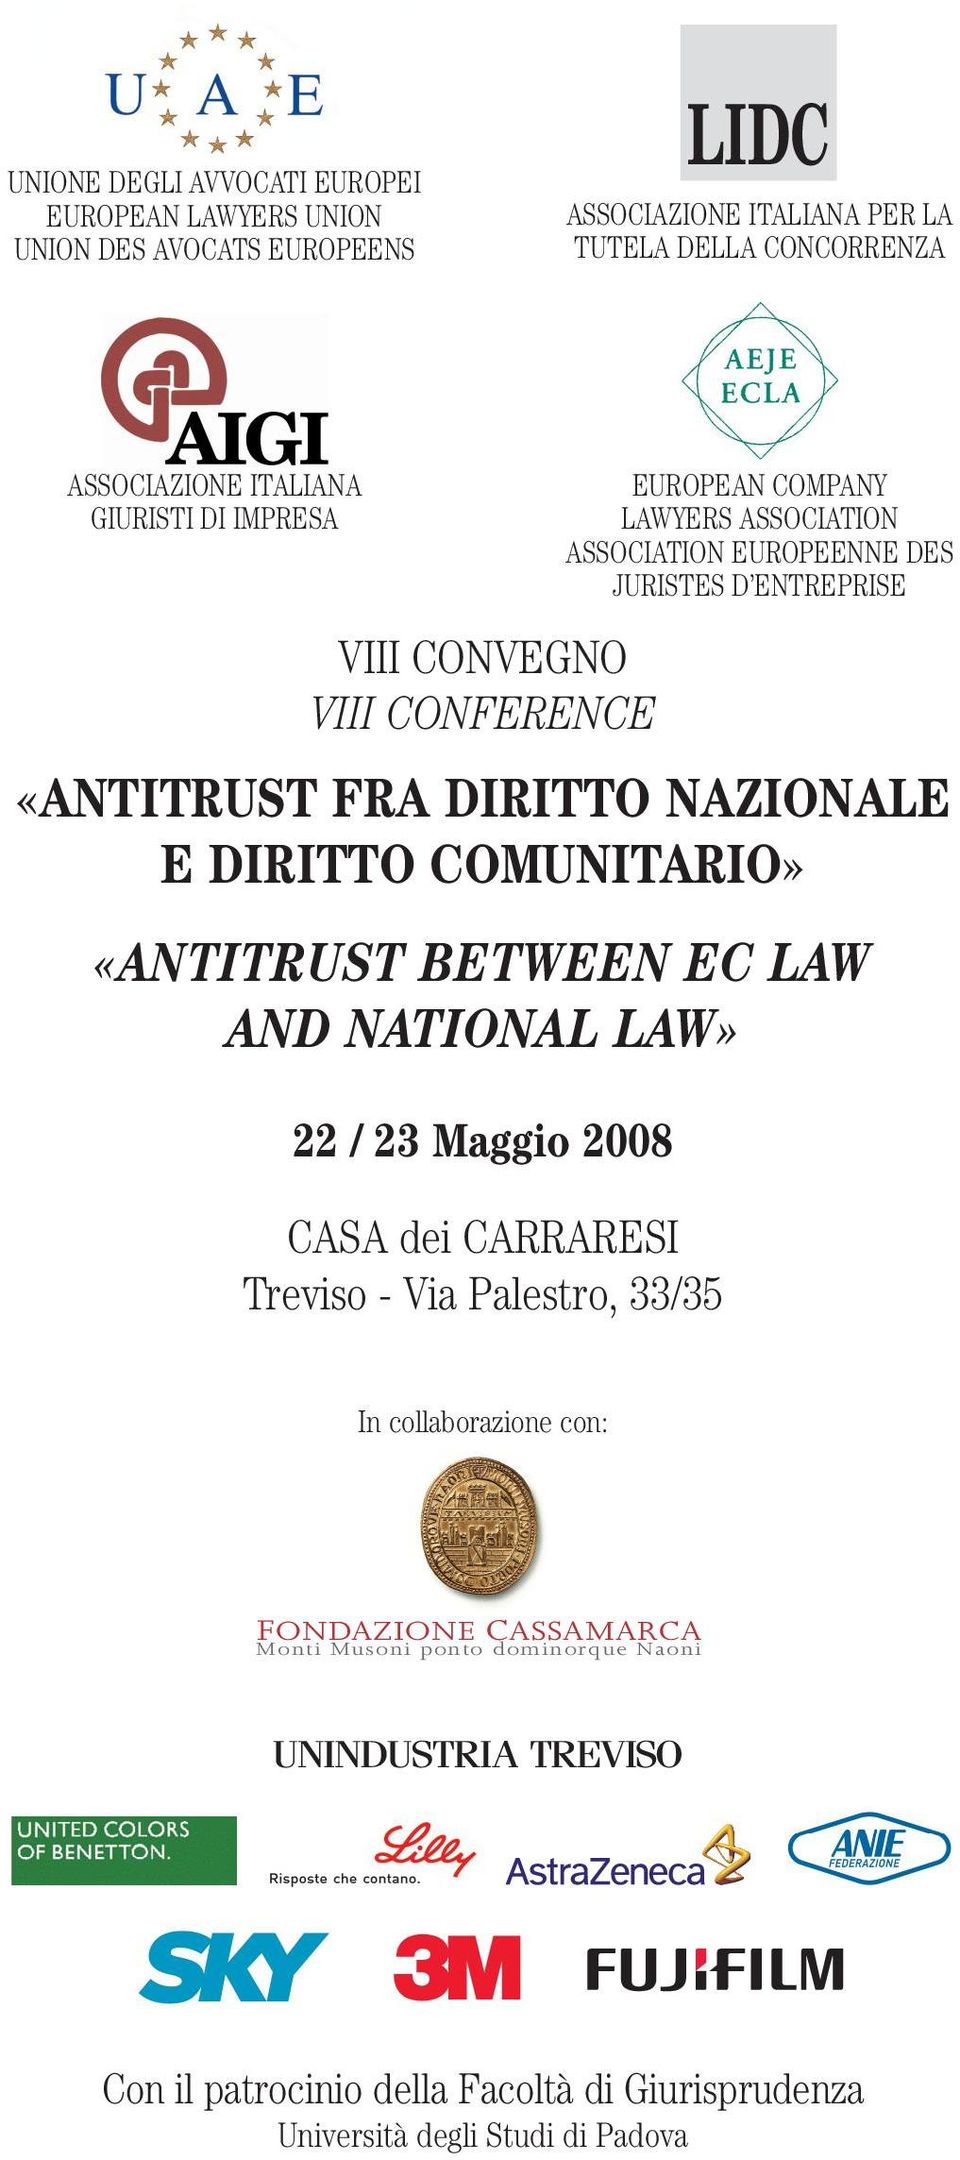 LAW» 22 / 23 Maggio 2008 CASA dei CARRARESI Treviso - Via Palestro, 33/35 EUROPEAN COMPANY LAWYERS ASSOCIATION ASSOCIATION EUROPEENNE DES JURISTES D